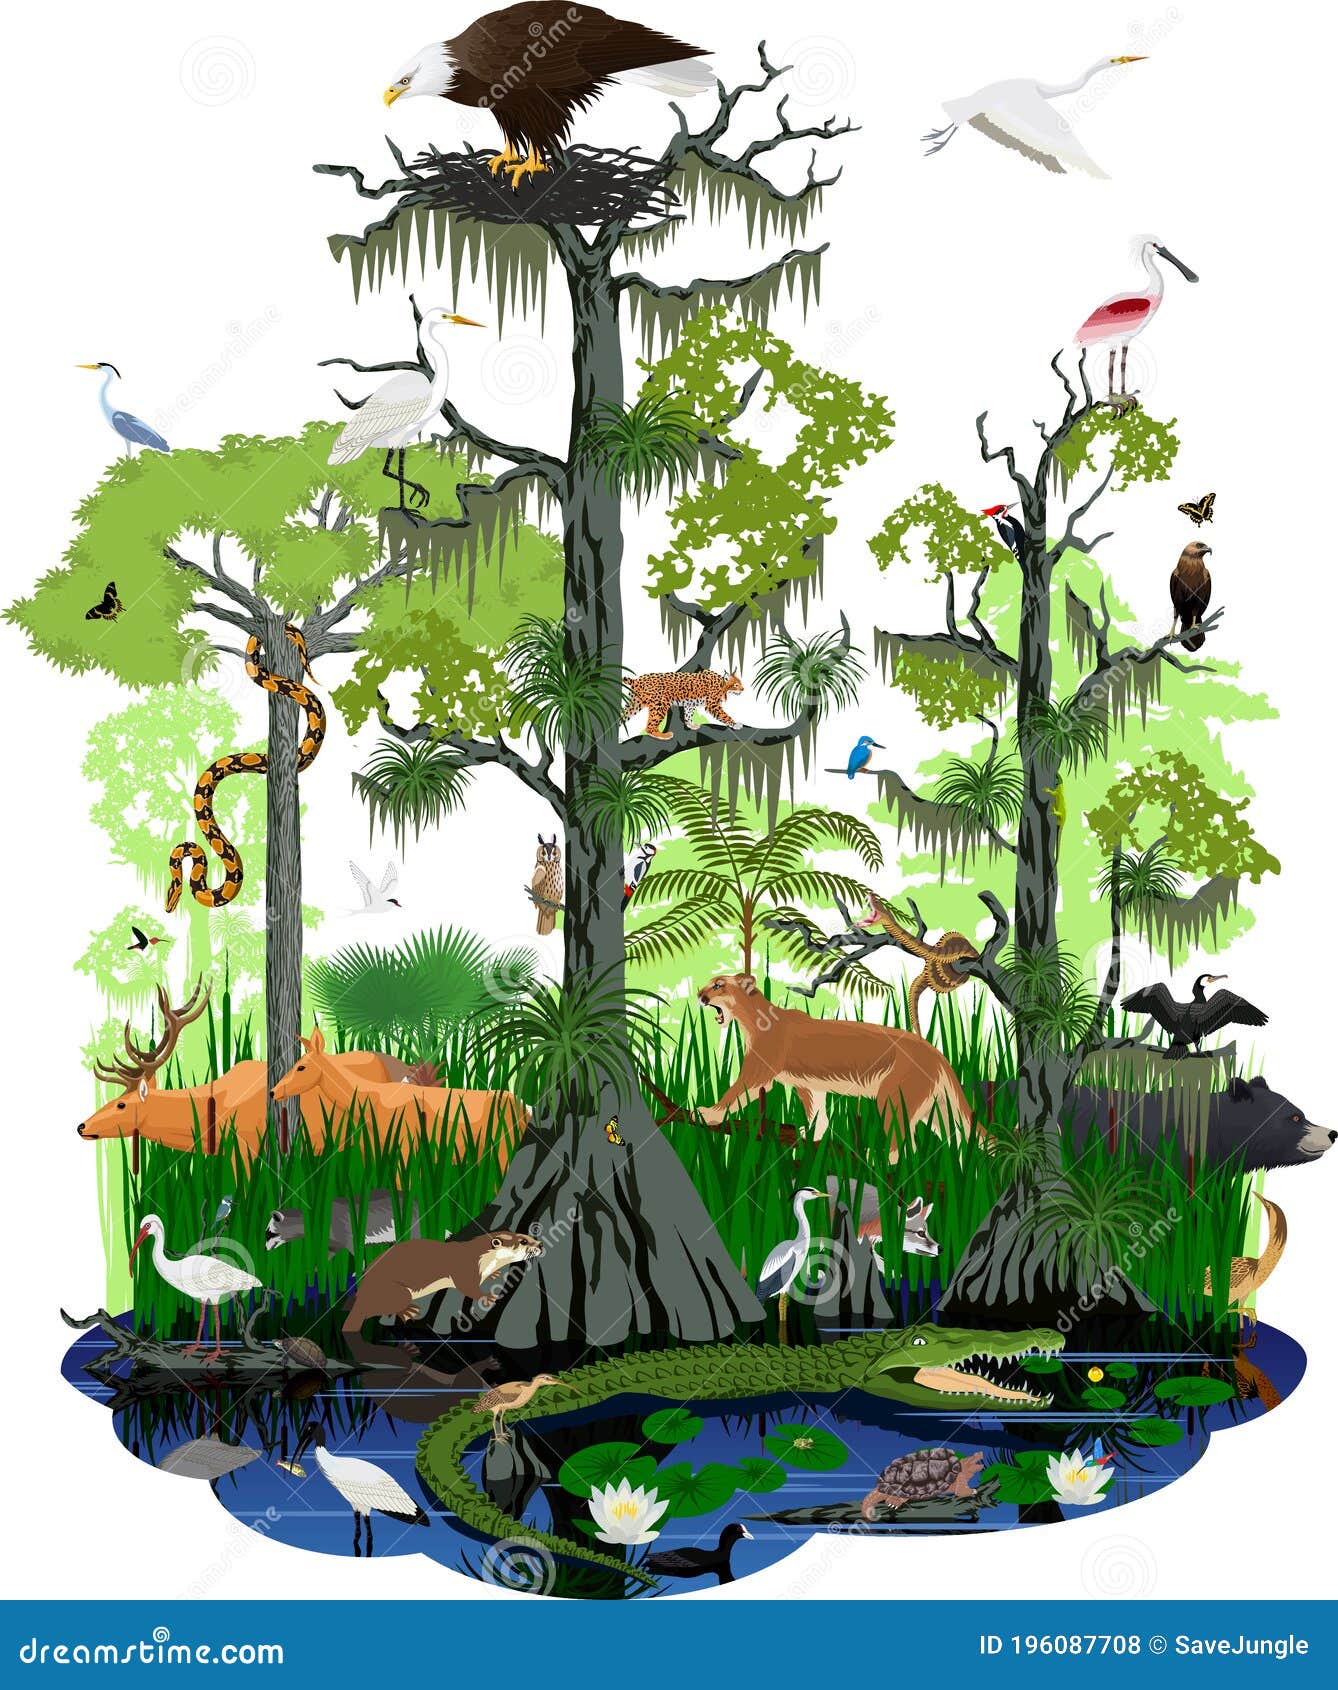 wetland or florida everglades landscape with different wetland animals